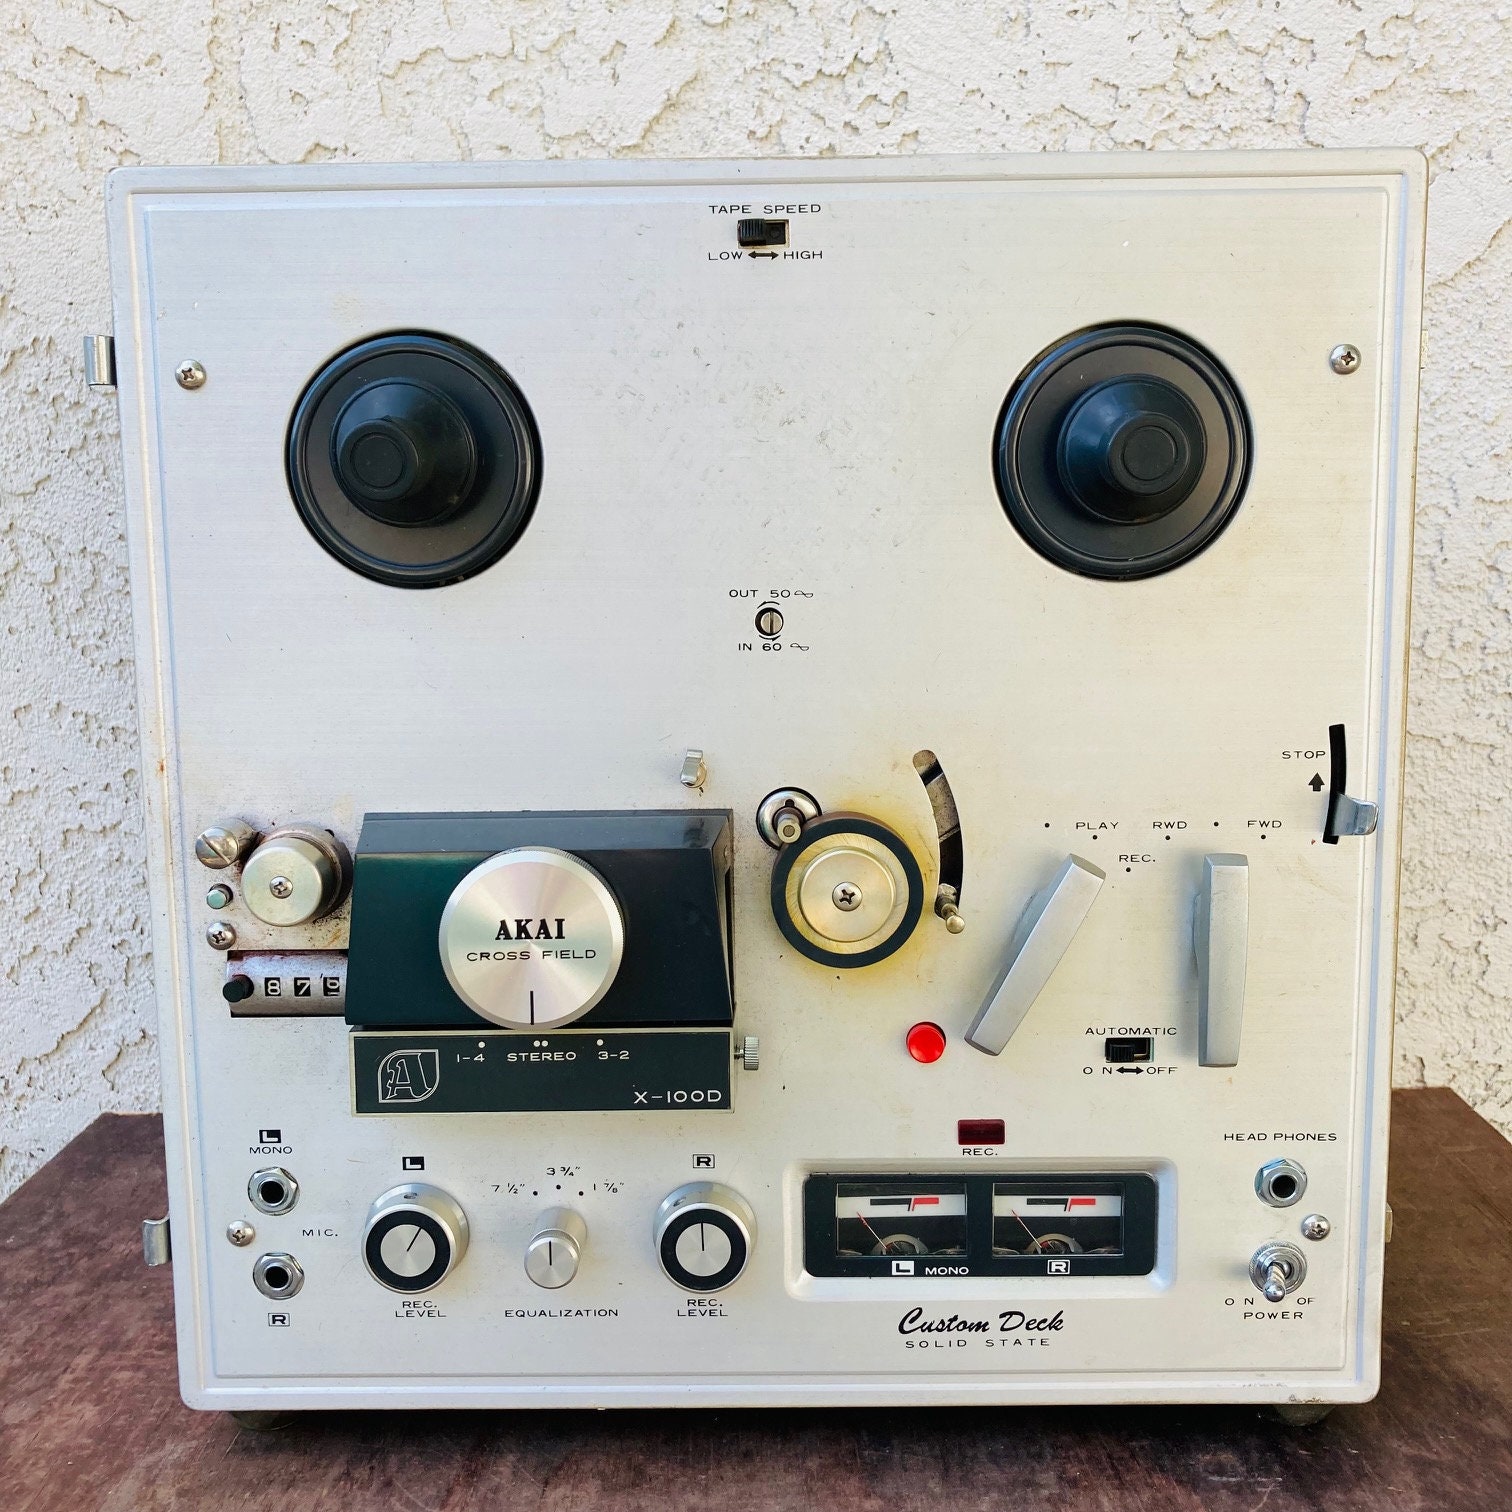 Vintage Akai X-100D Reel to Reel Tape Recorder, 1960s Collectible